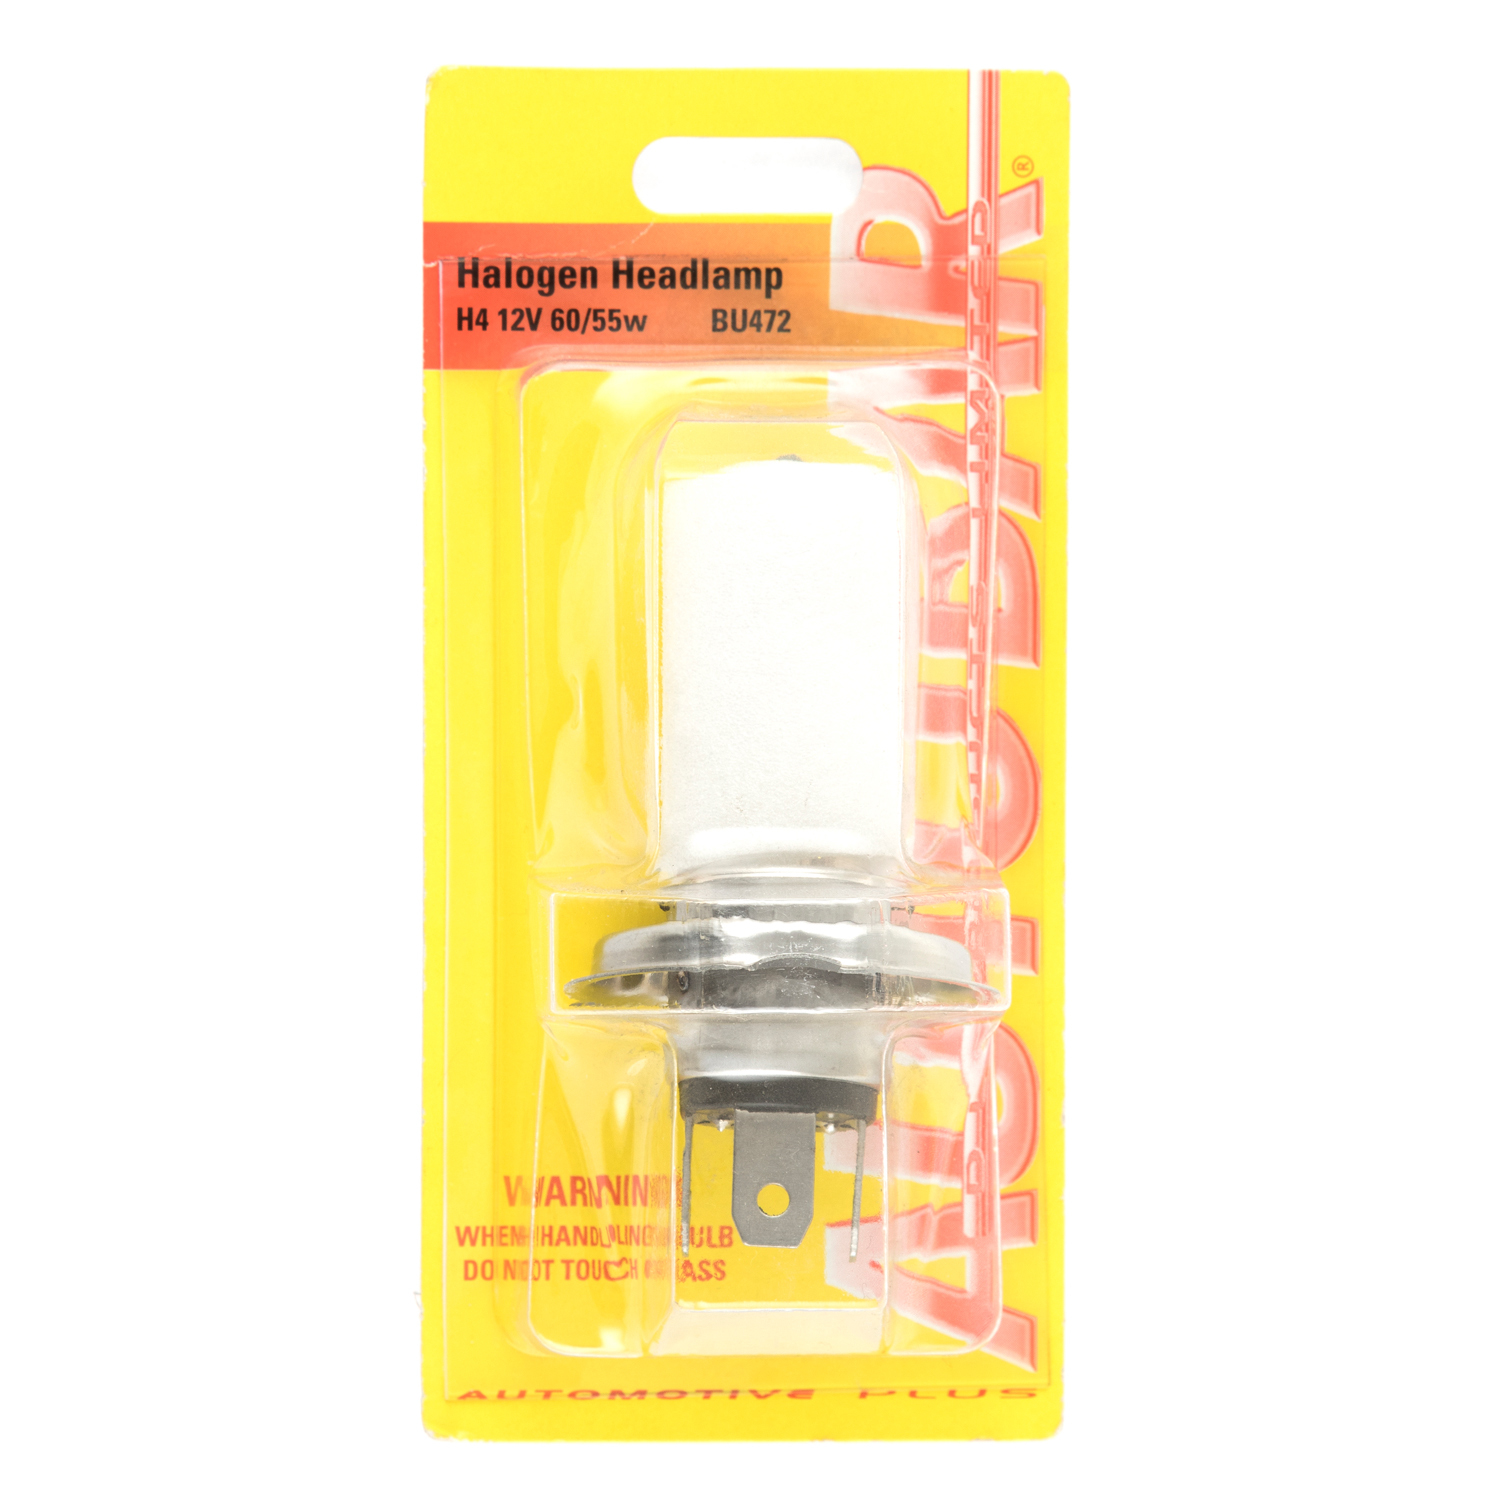 H4 Halogen Headlamp Bulb - 60/55W Image